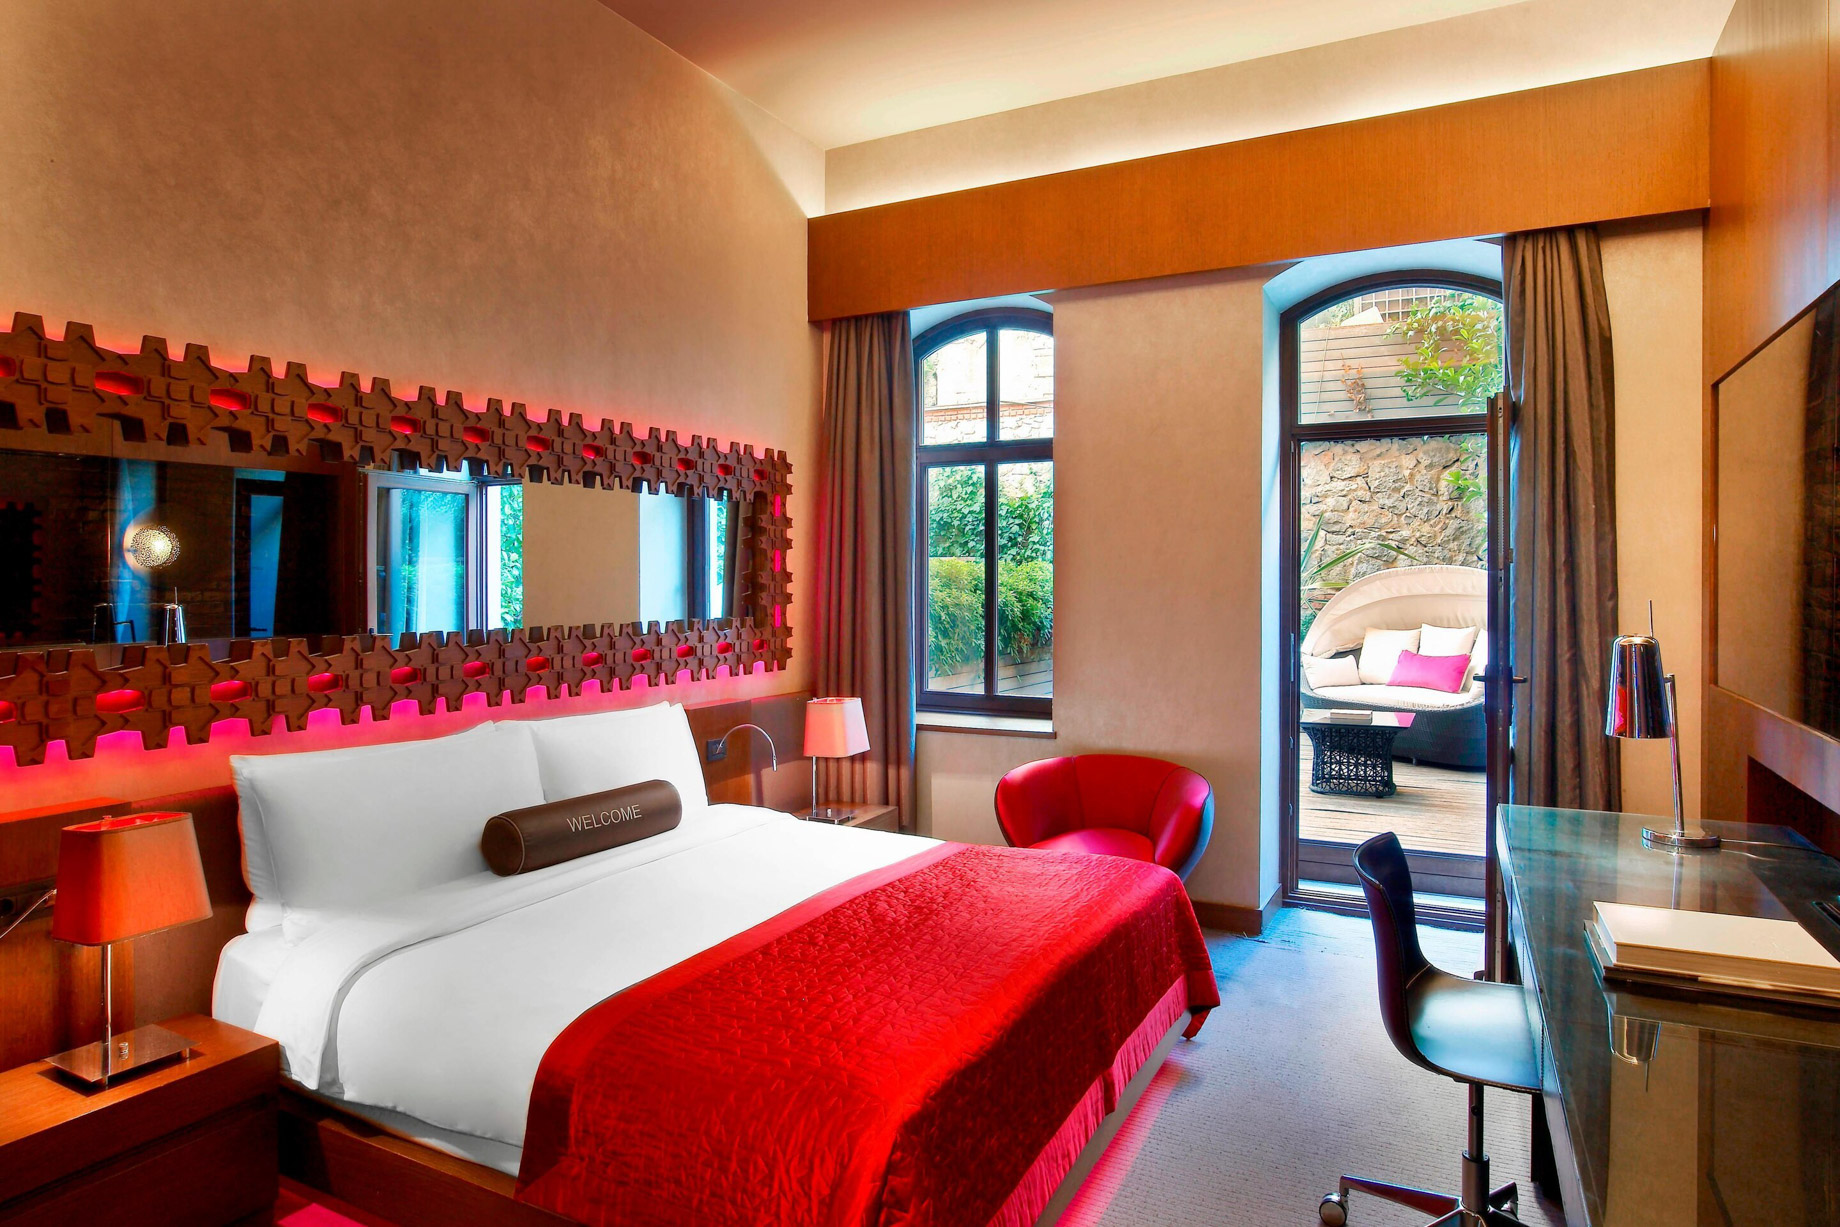 W Istanbul Hotel – Istanbul, Turkey – Spectacular Bedroom